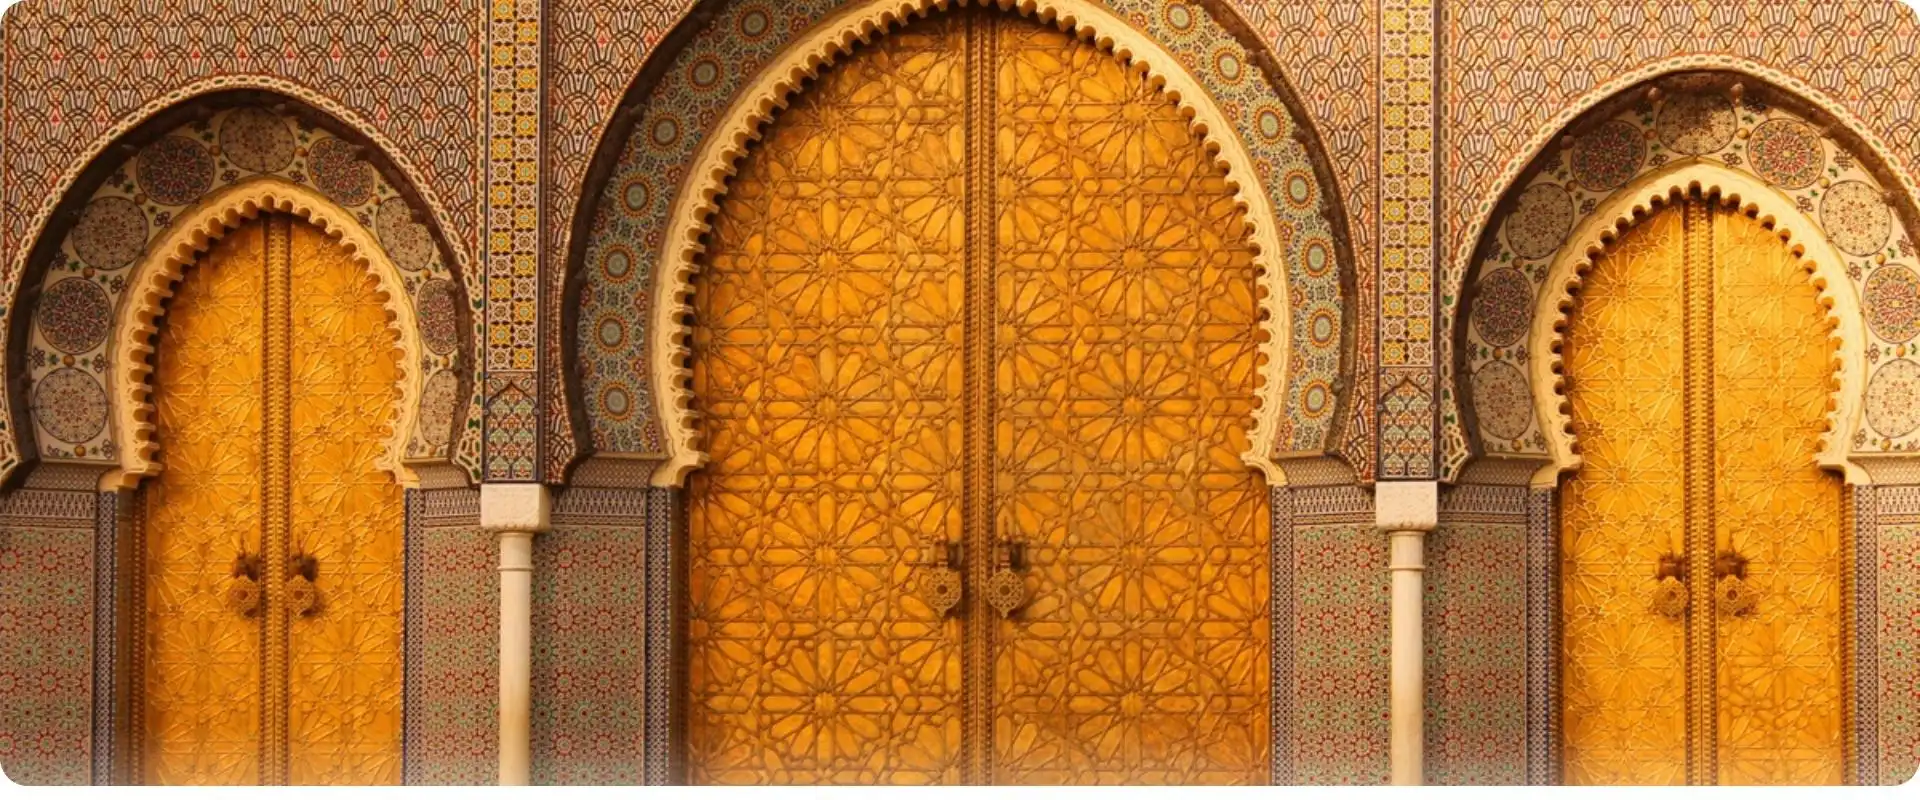 mosque i marokko charterrejse fra hamborg.webp